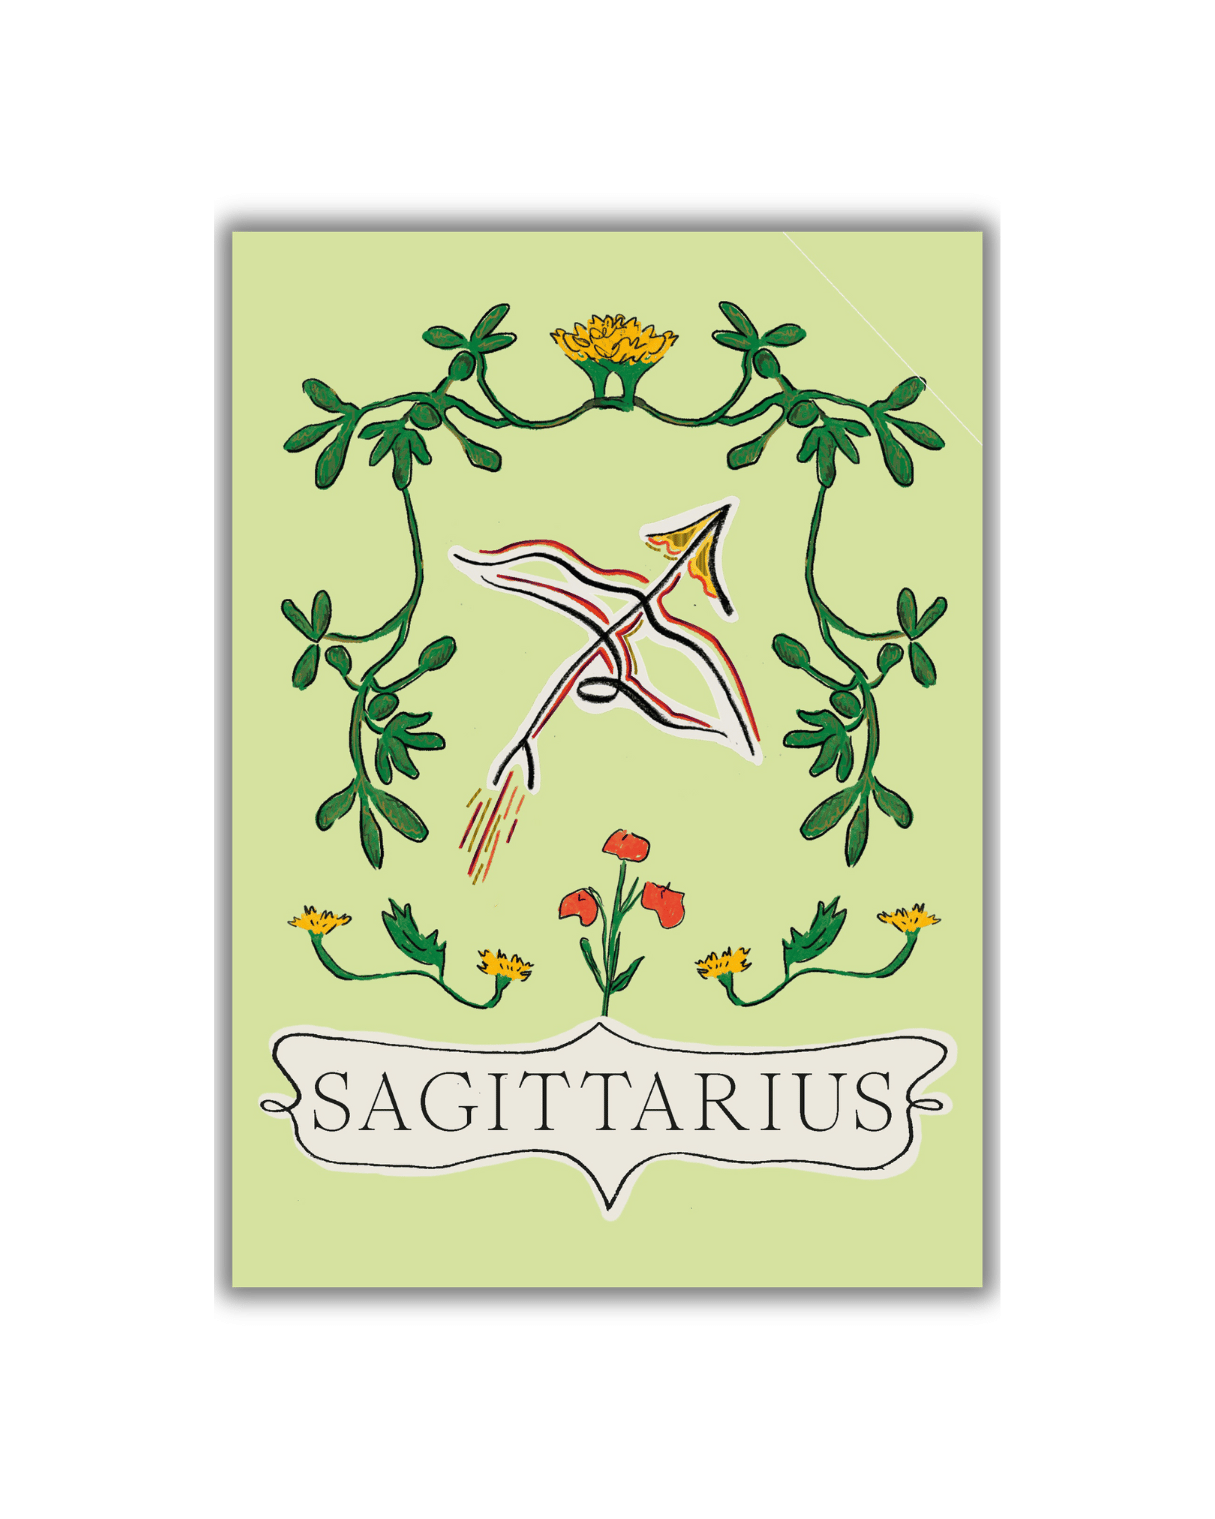 Sagittarius Book by Liberty Phi